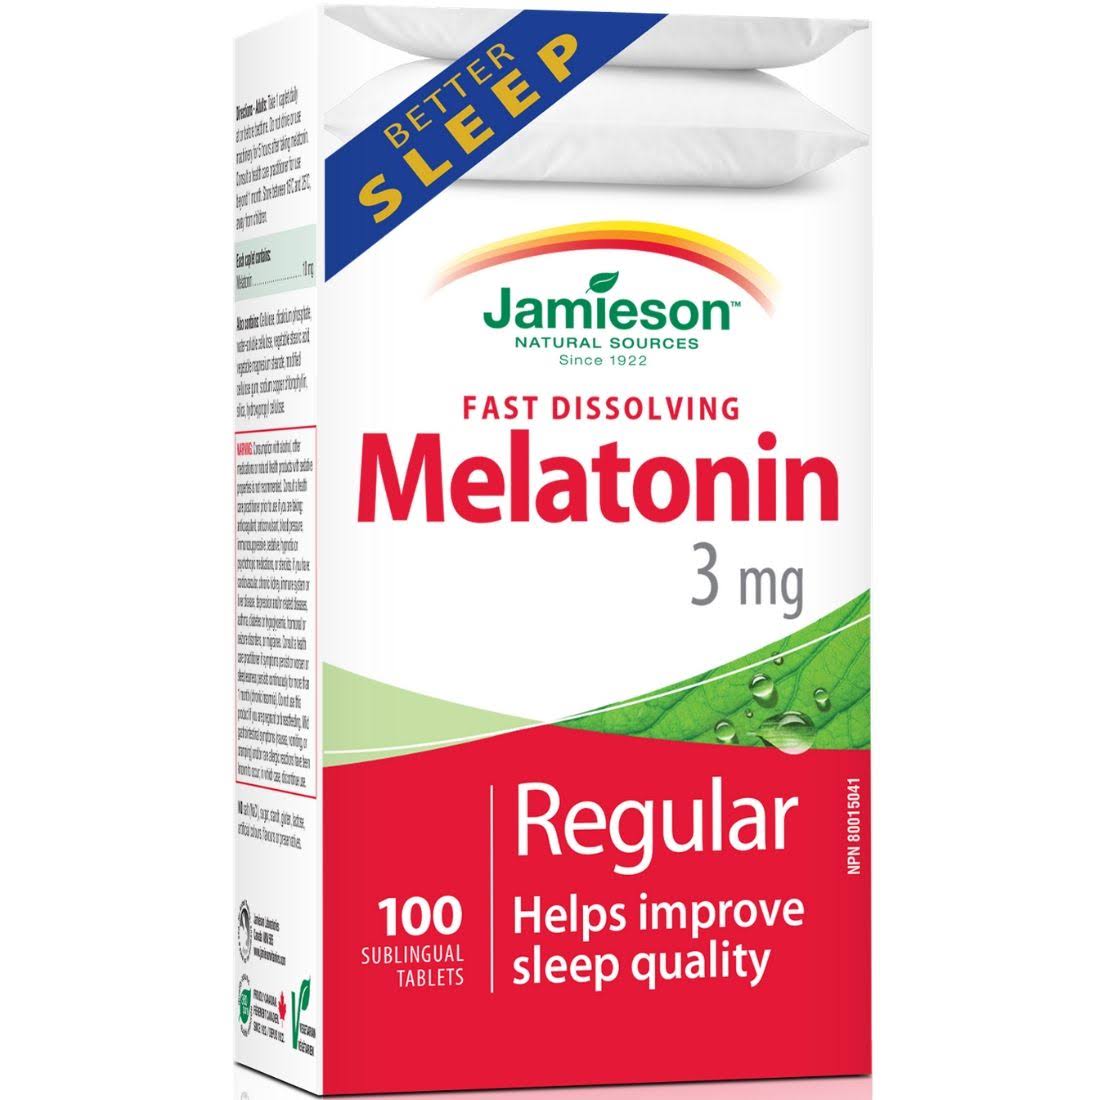 Jamieson Melatonin Sublingual Tablets - 100ct